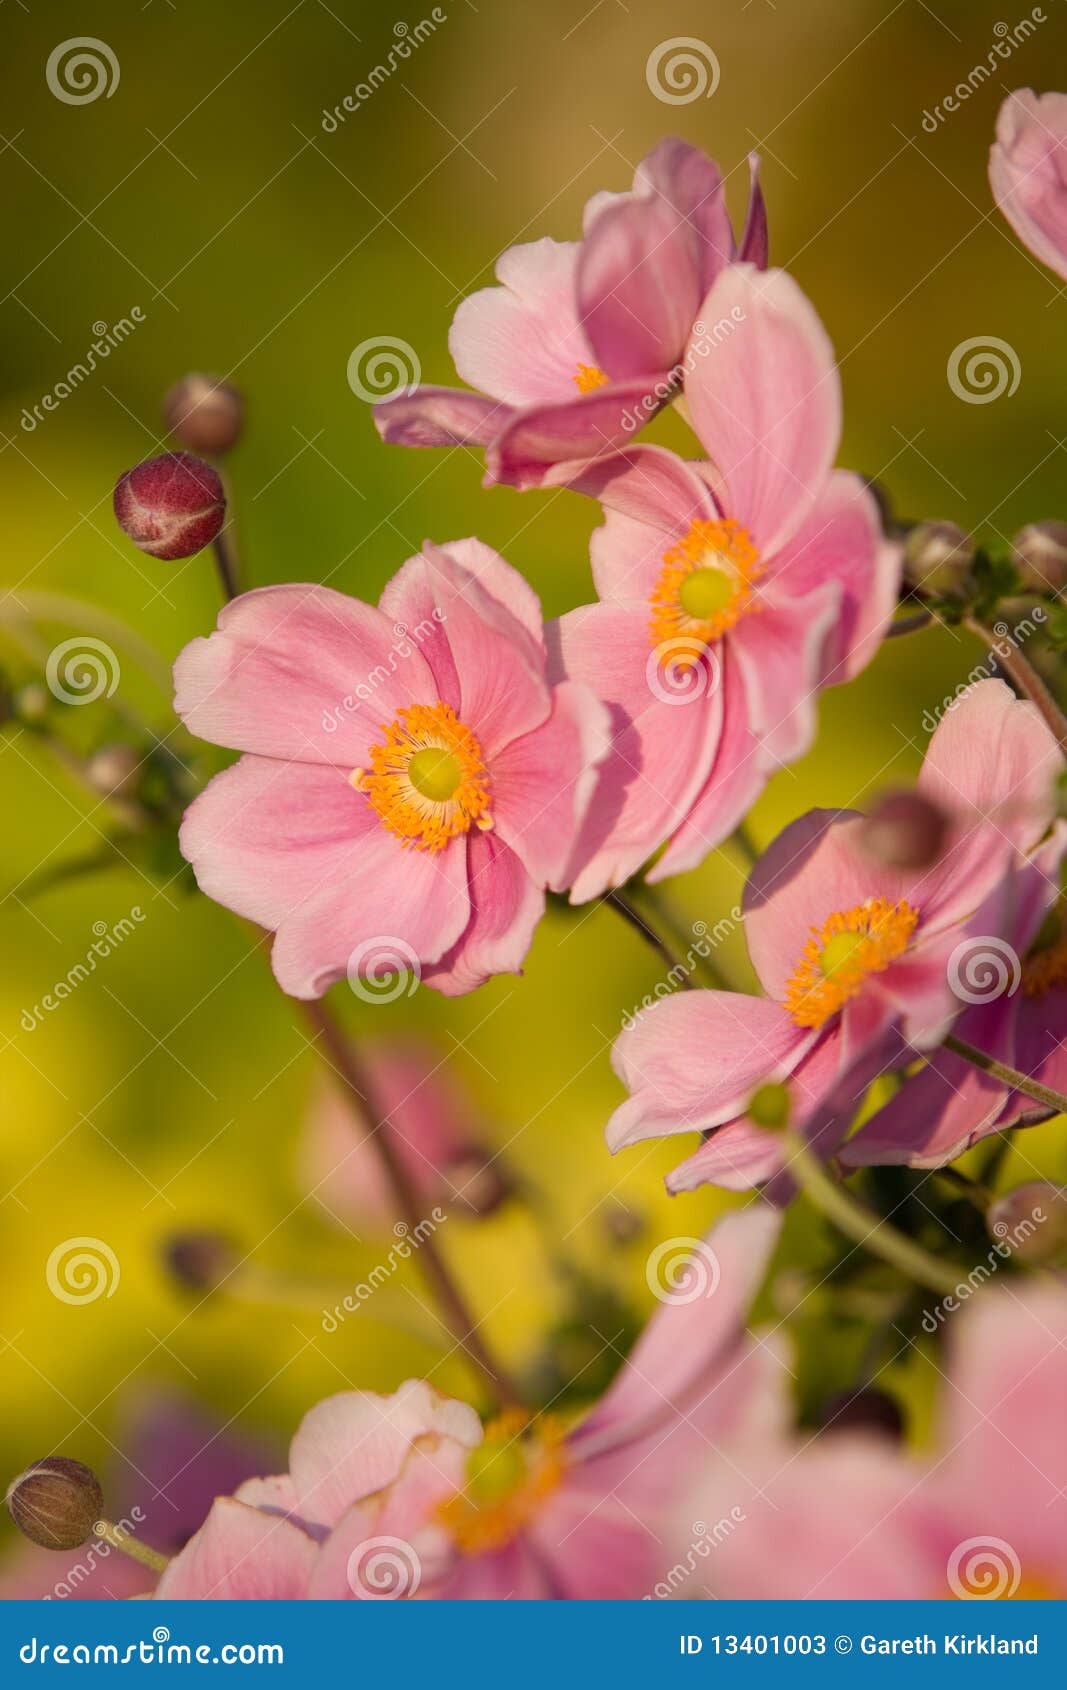 anemone,september charm